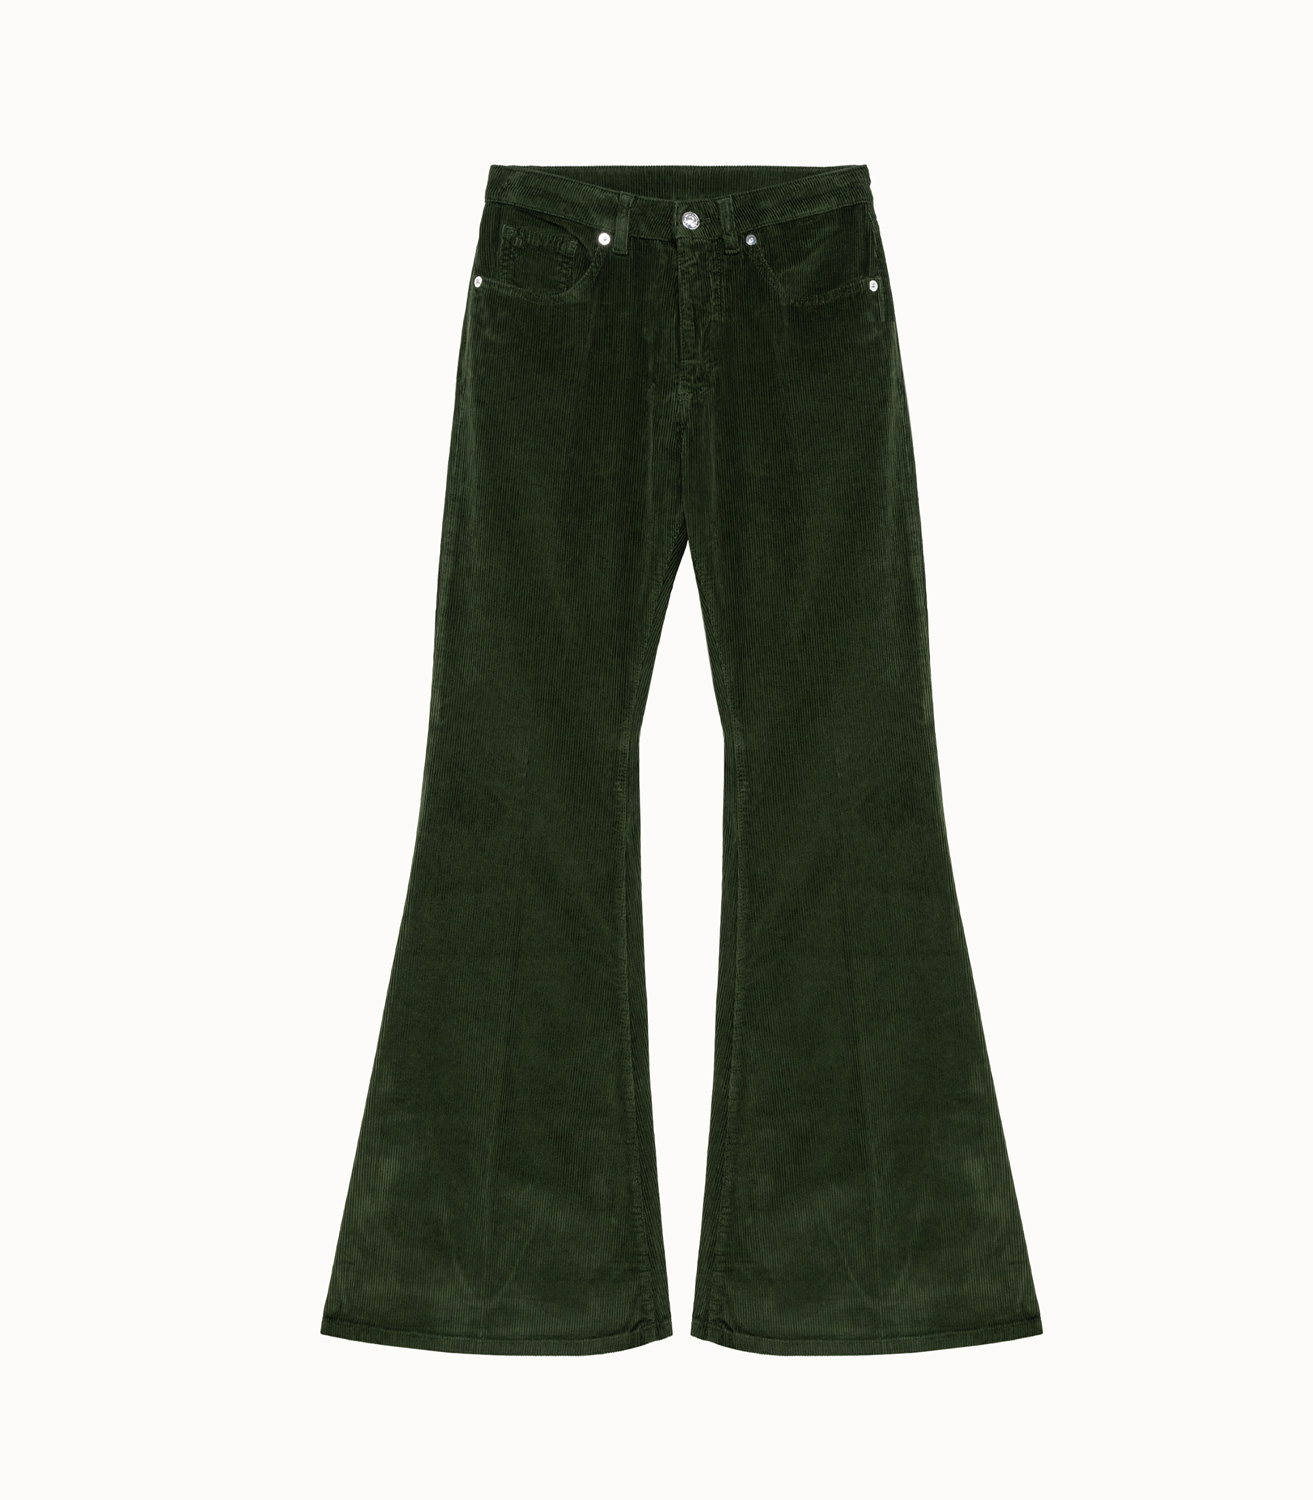 Jakarta Green Corduroy High-Waisted Pants